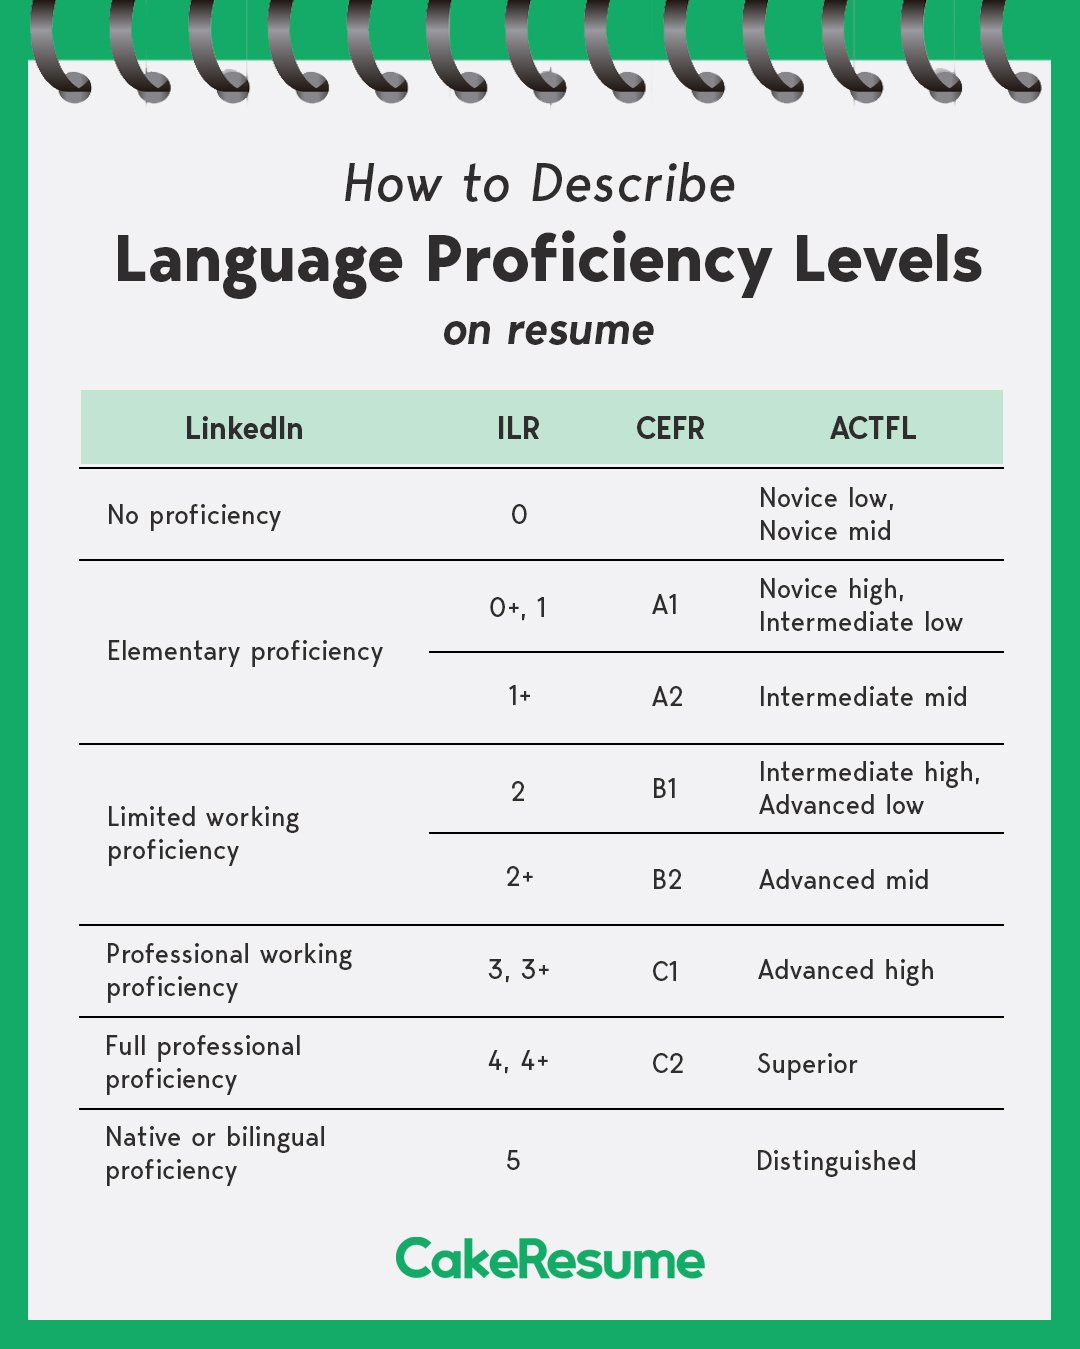 language-skills-and-proficiency-levels-on-resume